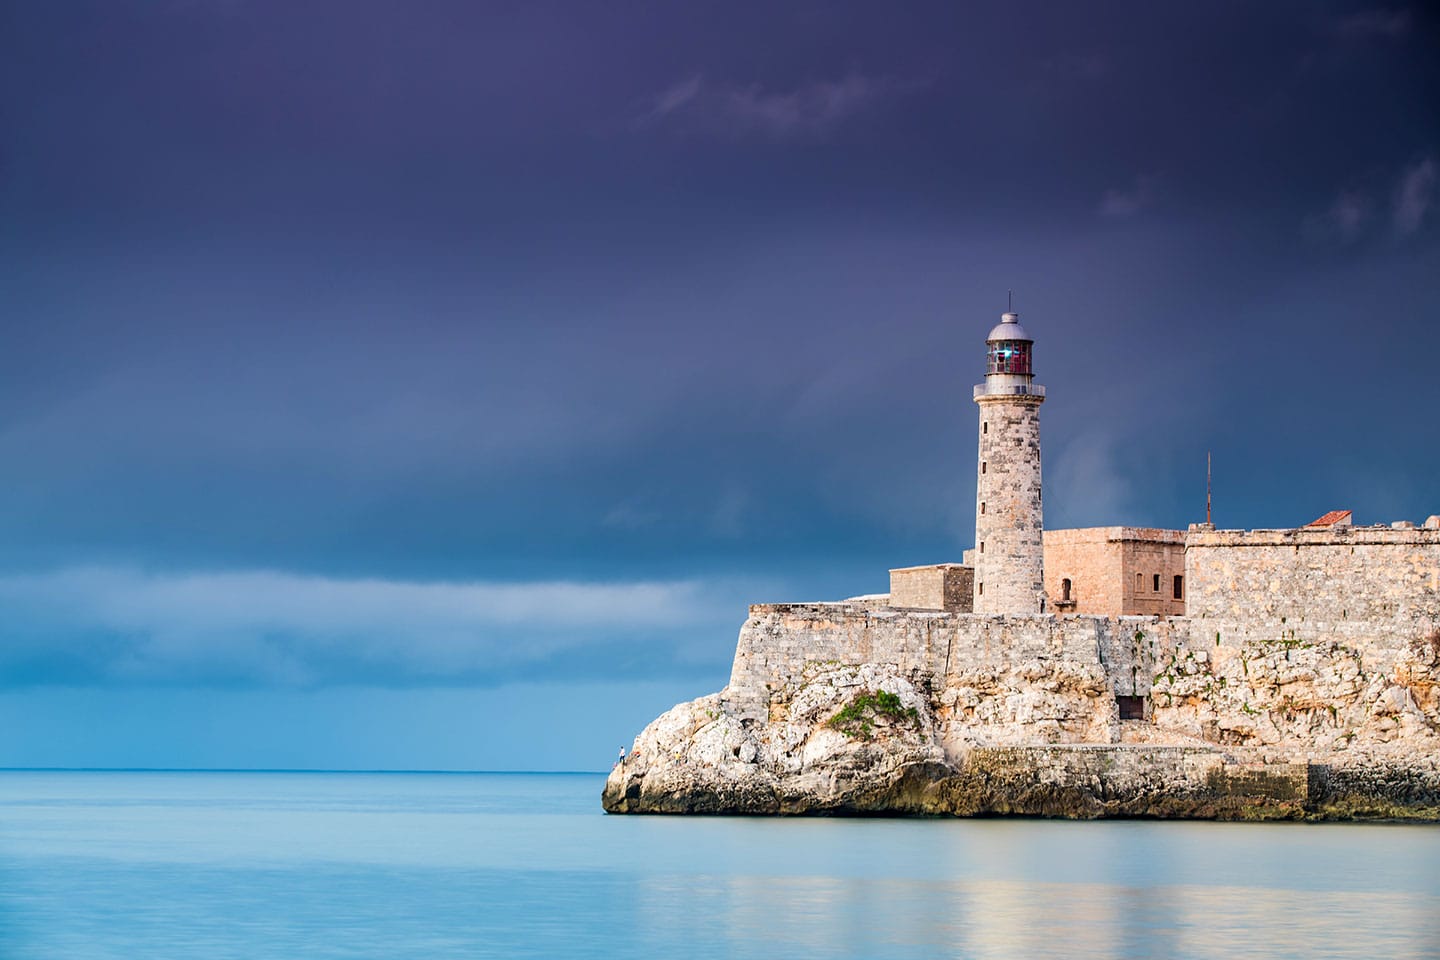 Lighthouse in the harbor of Havana, Cuba